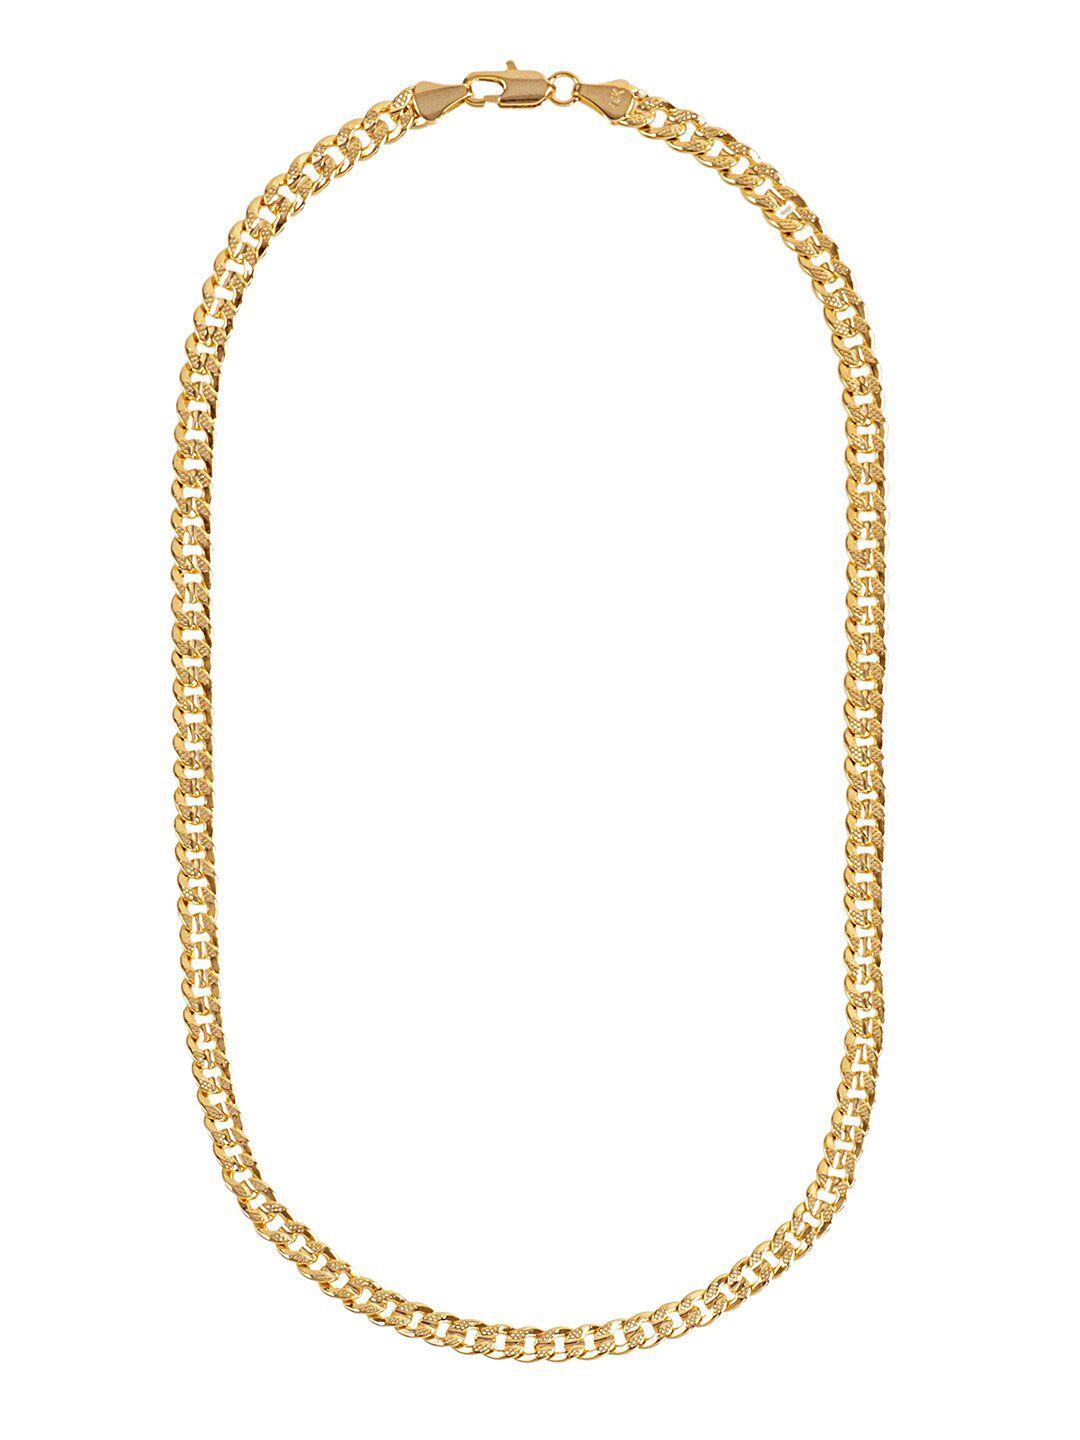 shining jewel - by shivansh brass gold-plated chain